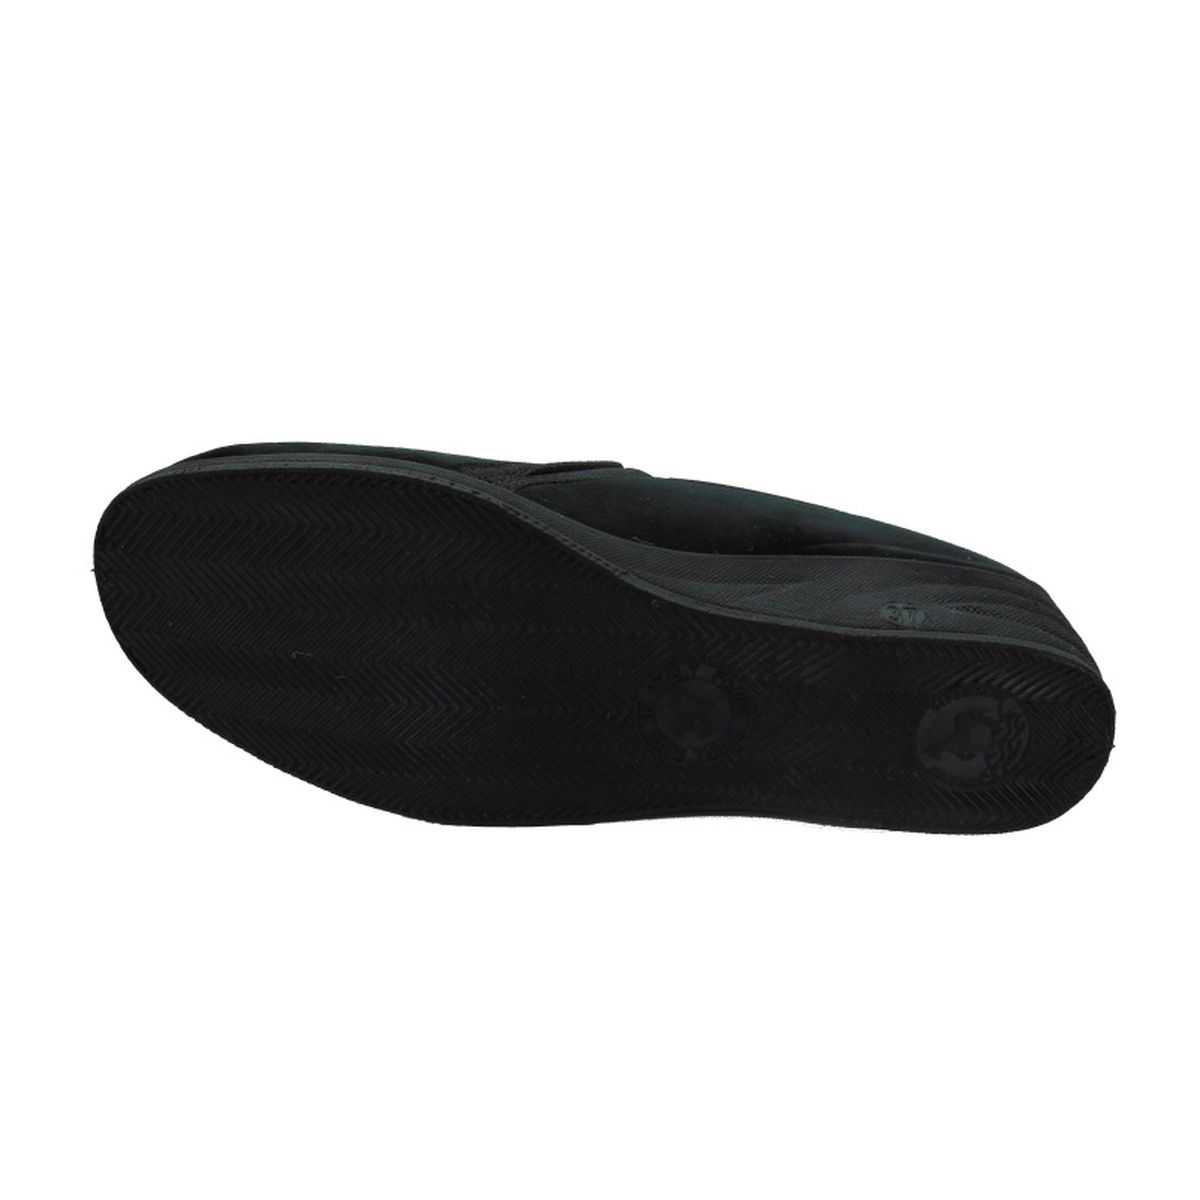 Pantofola Donna con elastici Emanuela articolo 815 colore nero algarve.